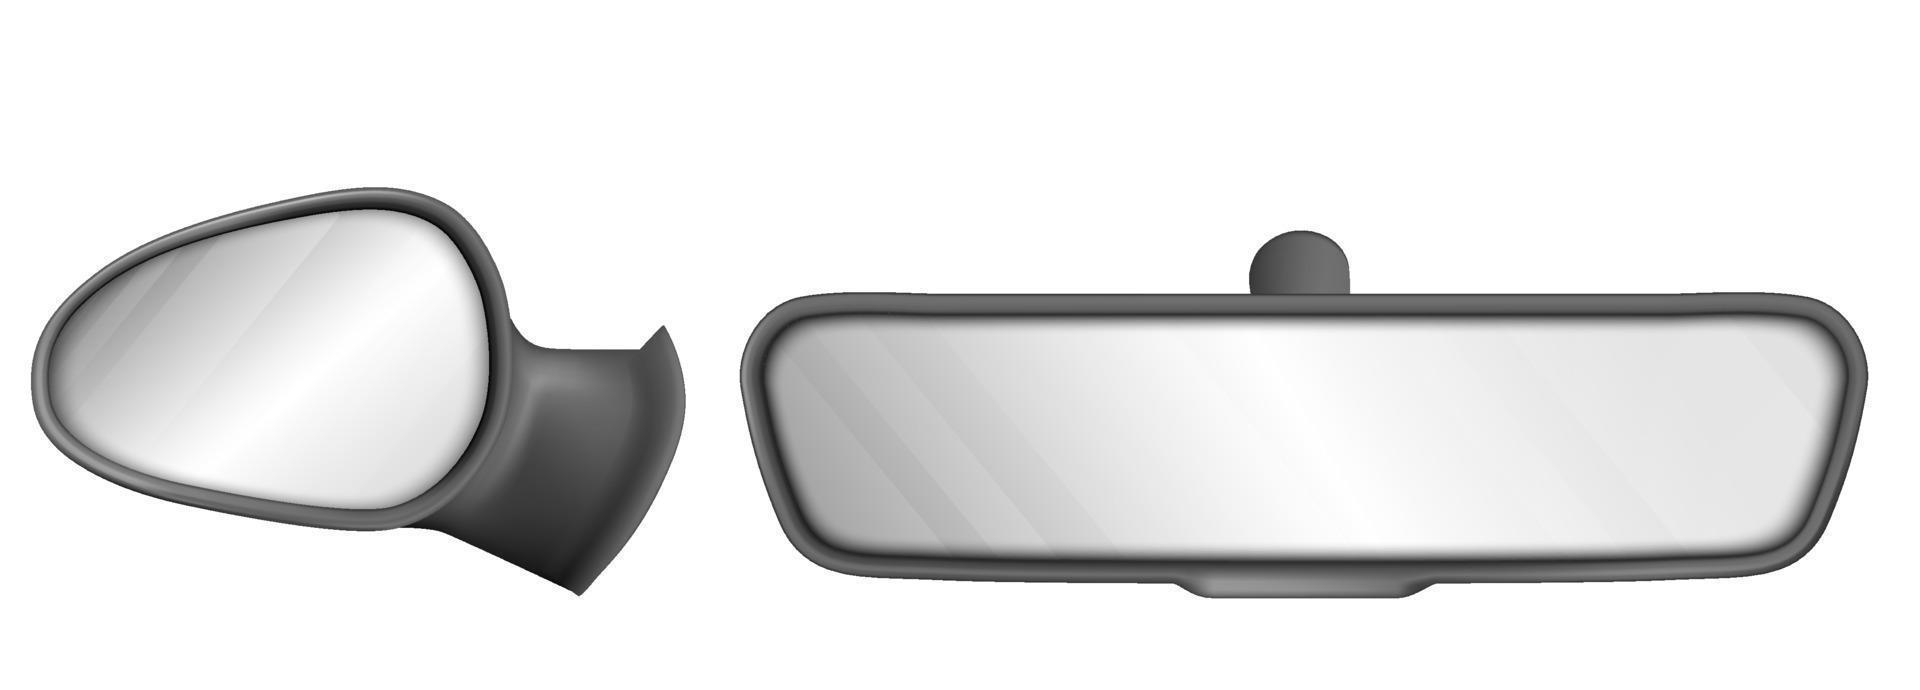 vector kant en achterzijde visie auto spiegels